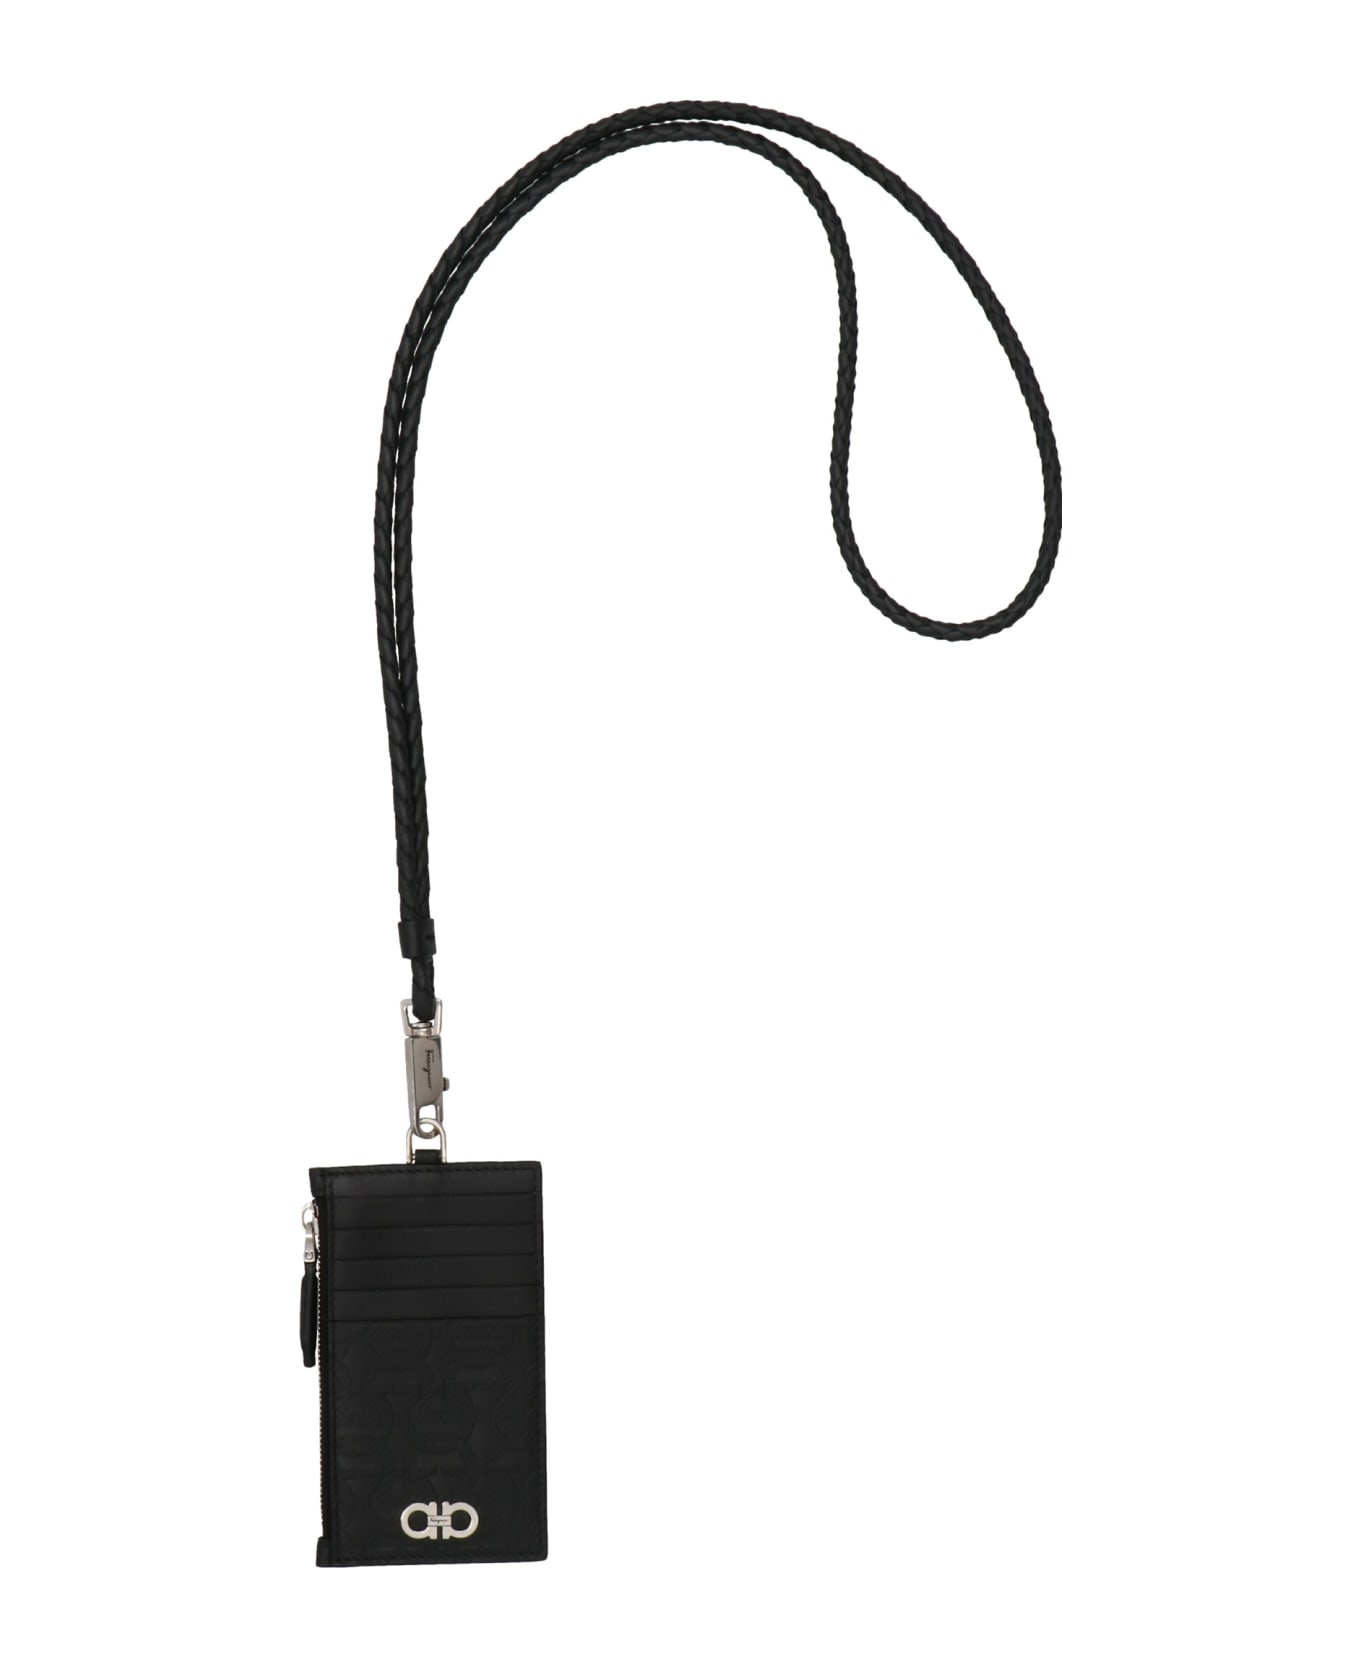 Ferragamo 'gancio' Card Holder With A Shoulder Strap - Black   財布